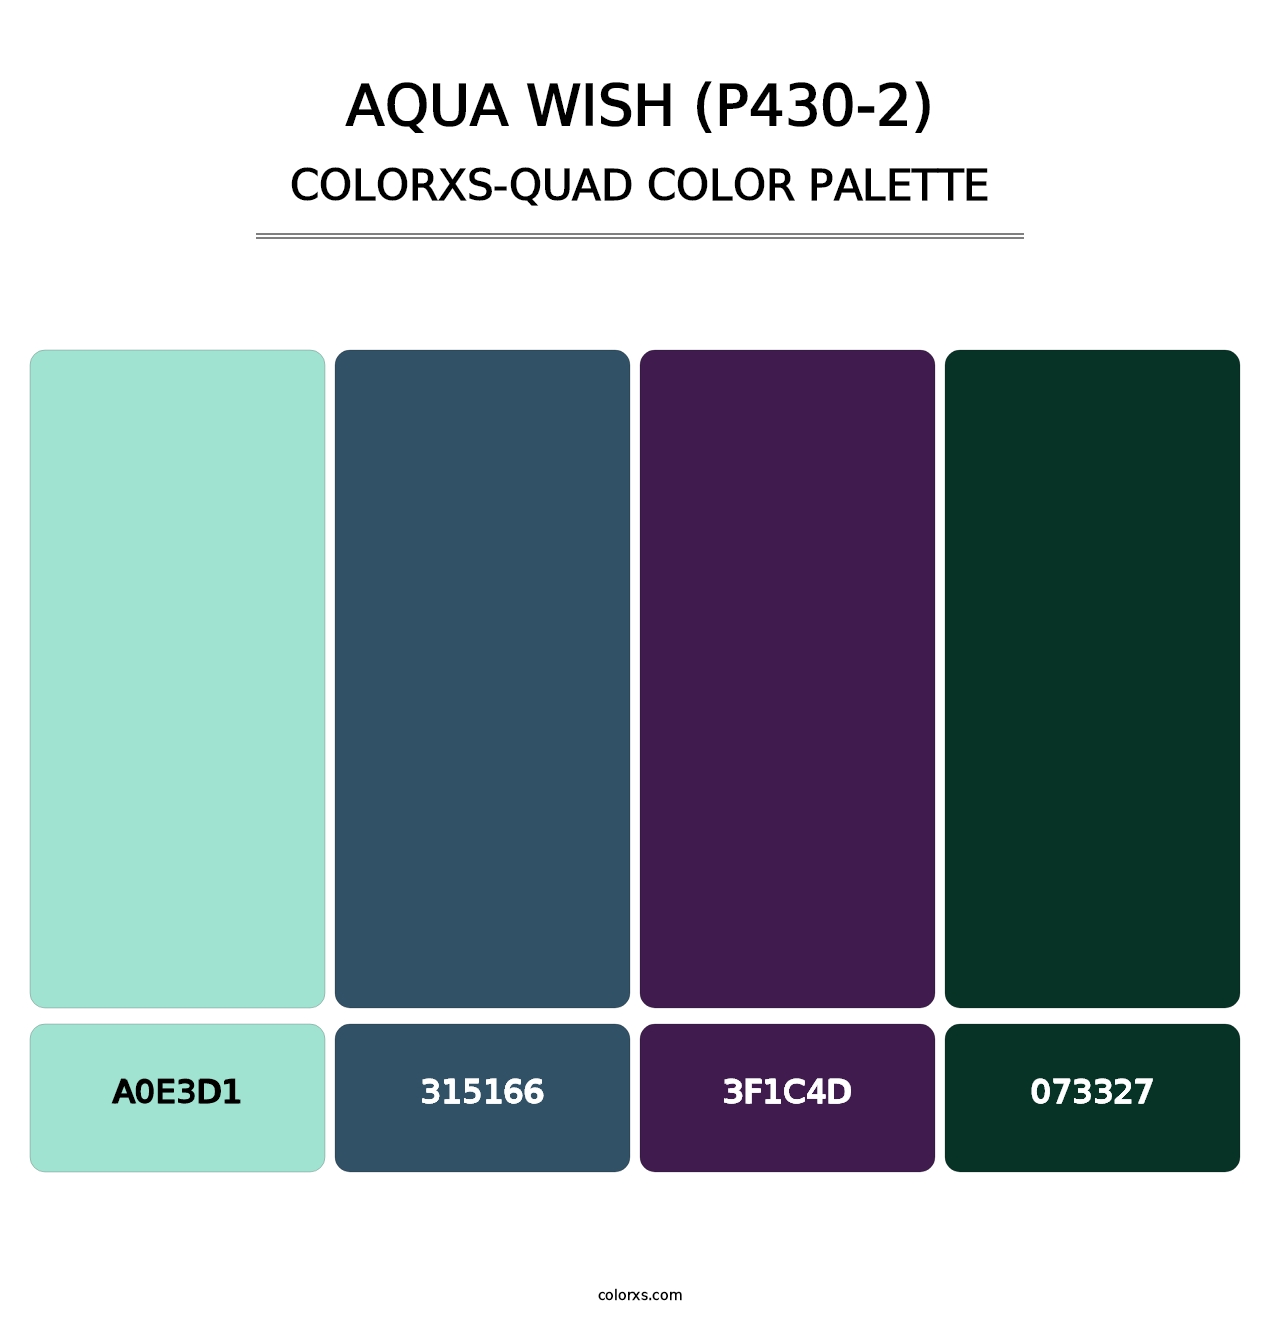 Aqua Wish (P430-2) - Colorxs Quad Palette